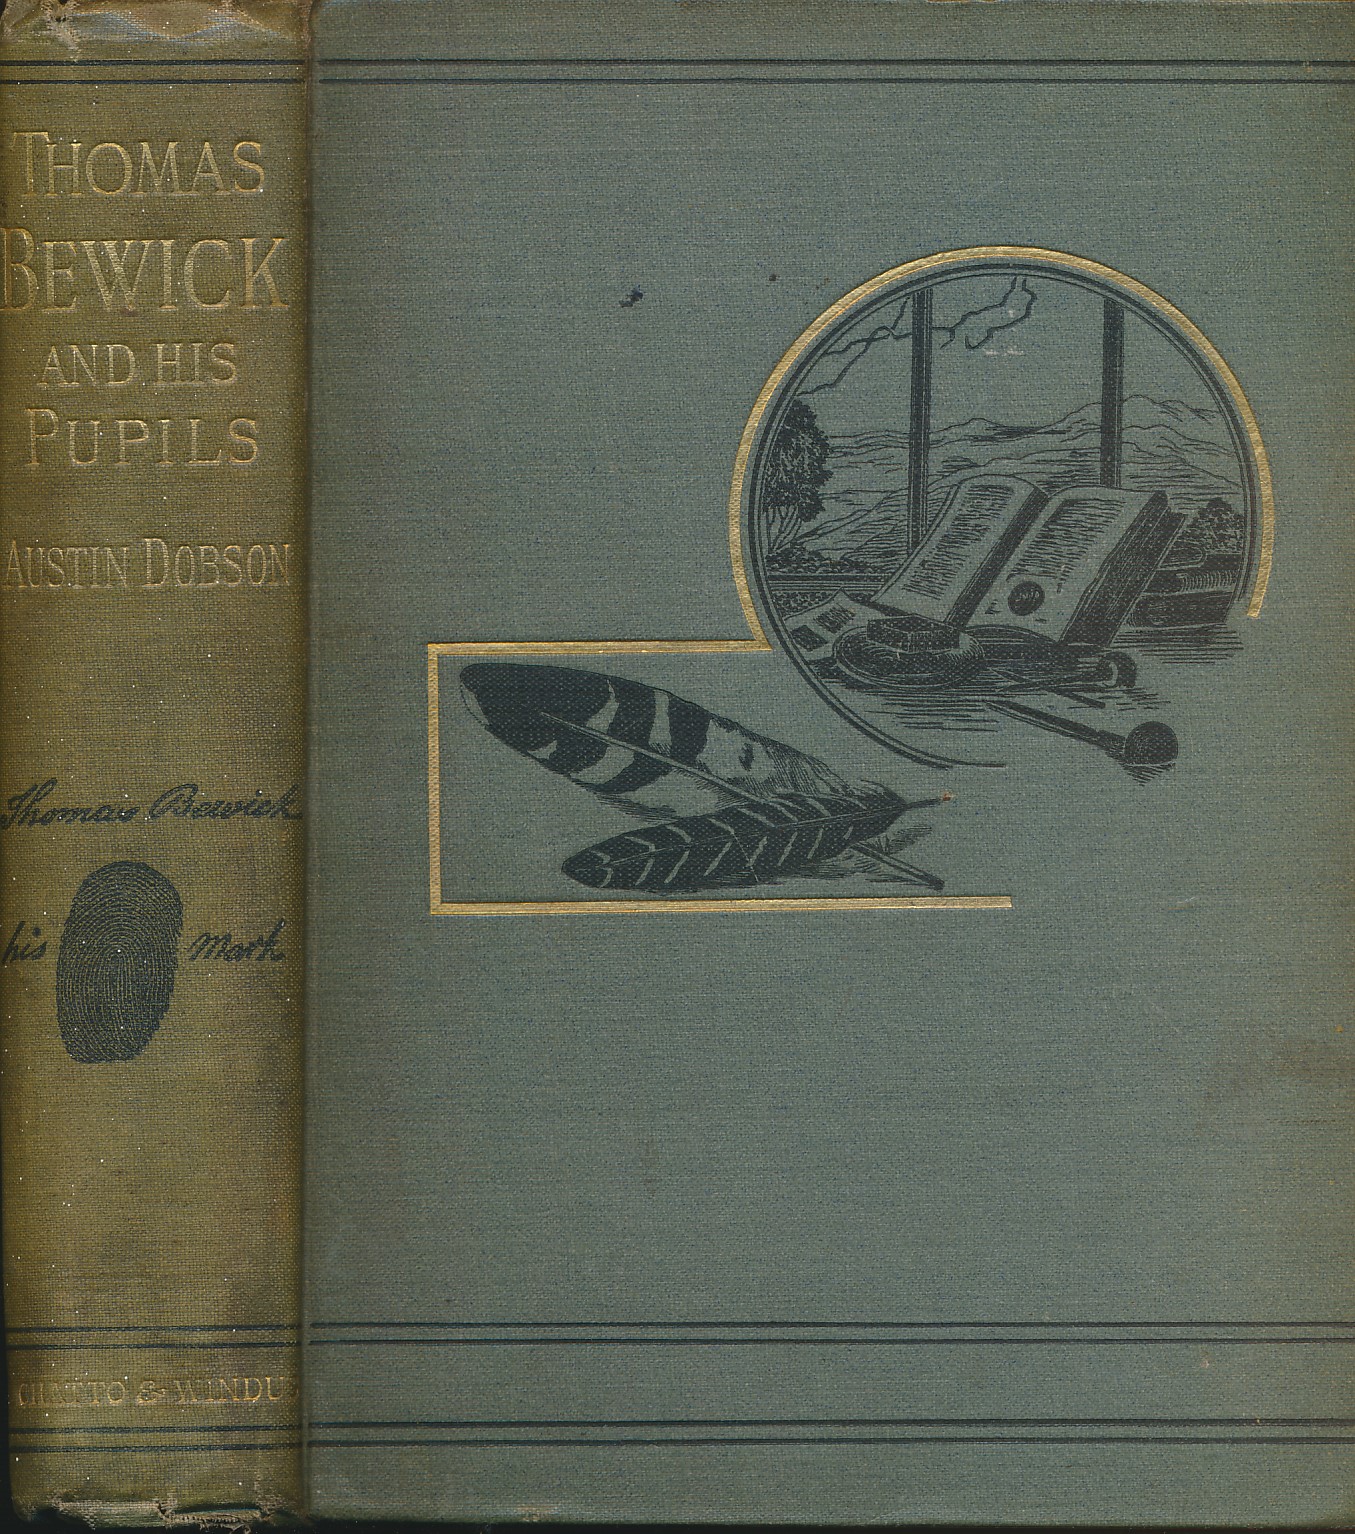 Thomas Bewick and his Pupils